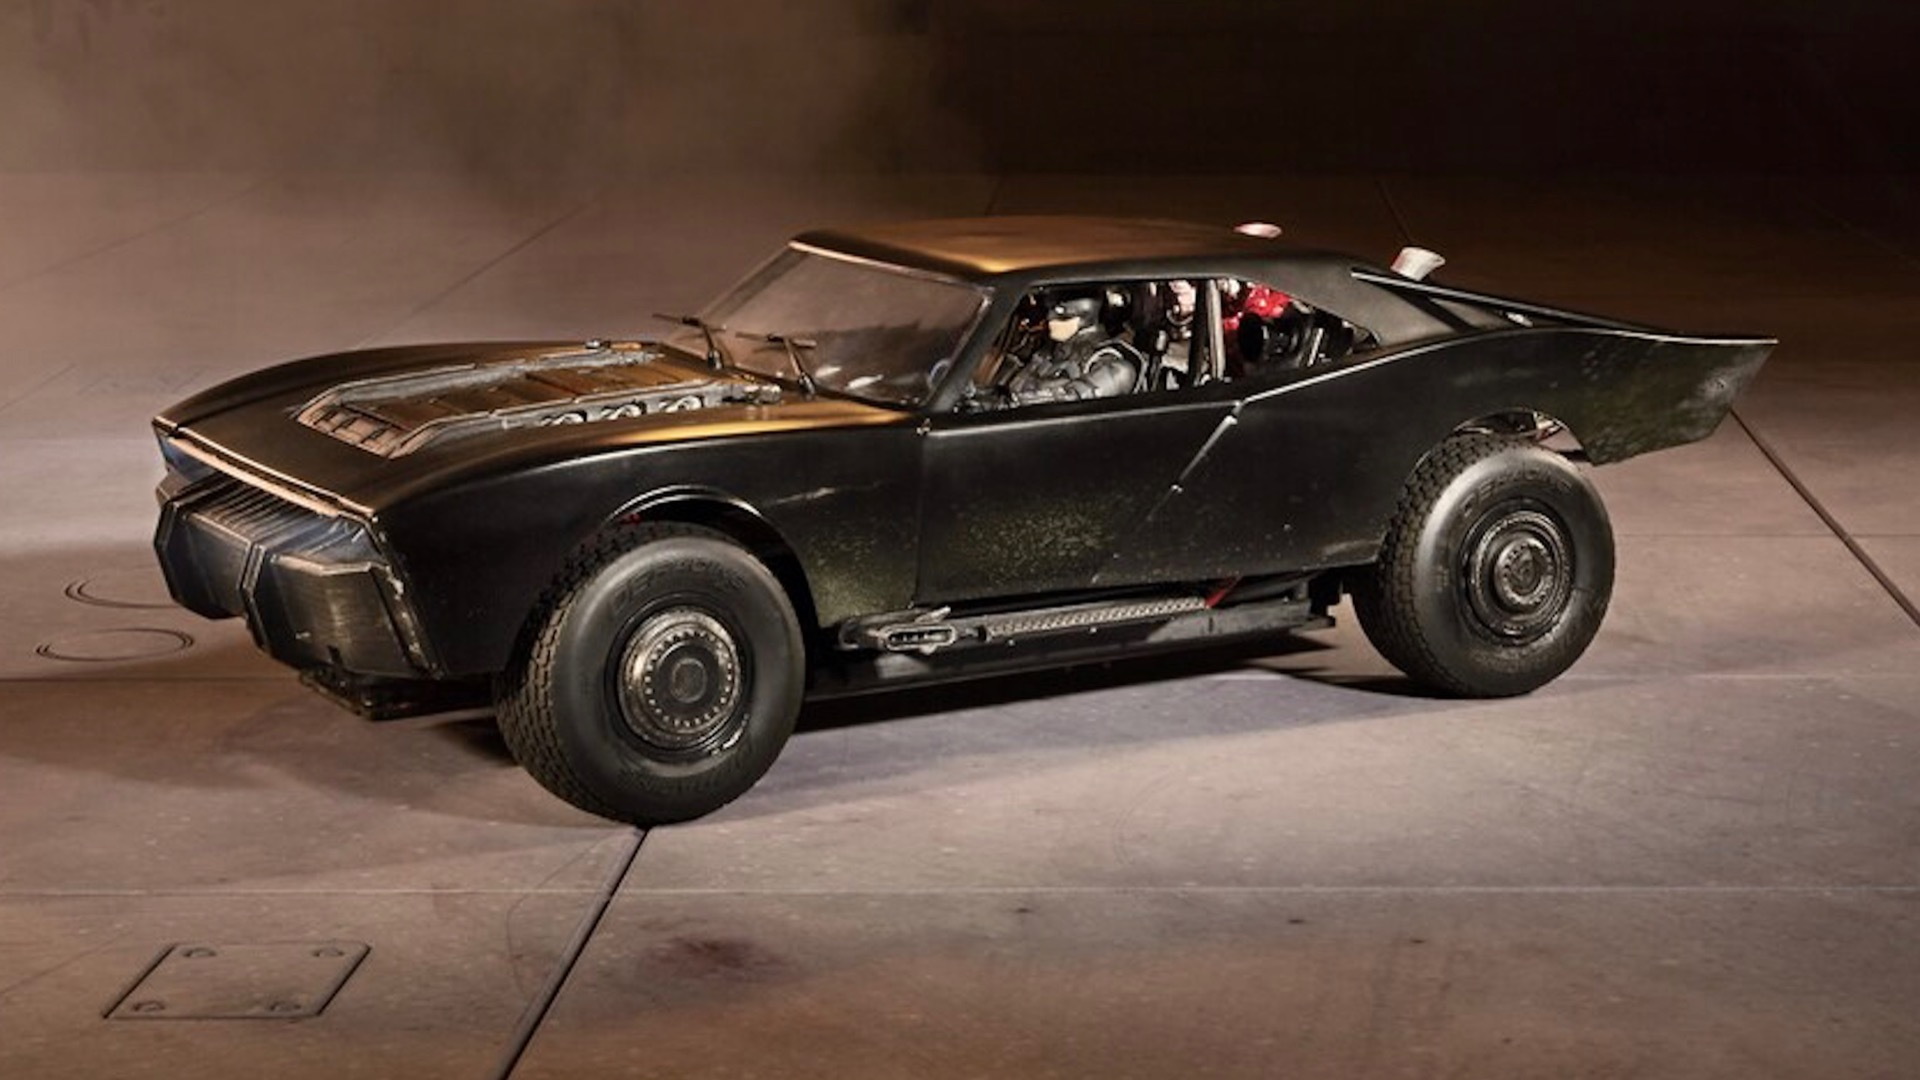 "The Batman" Hot Wheels RC Batmobile